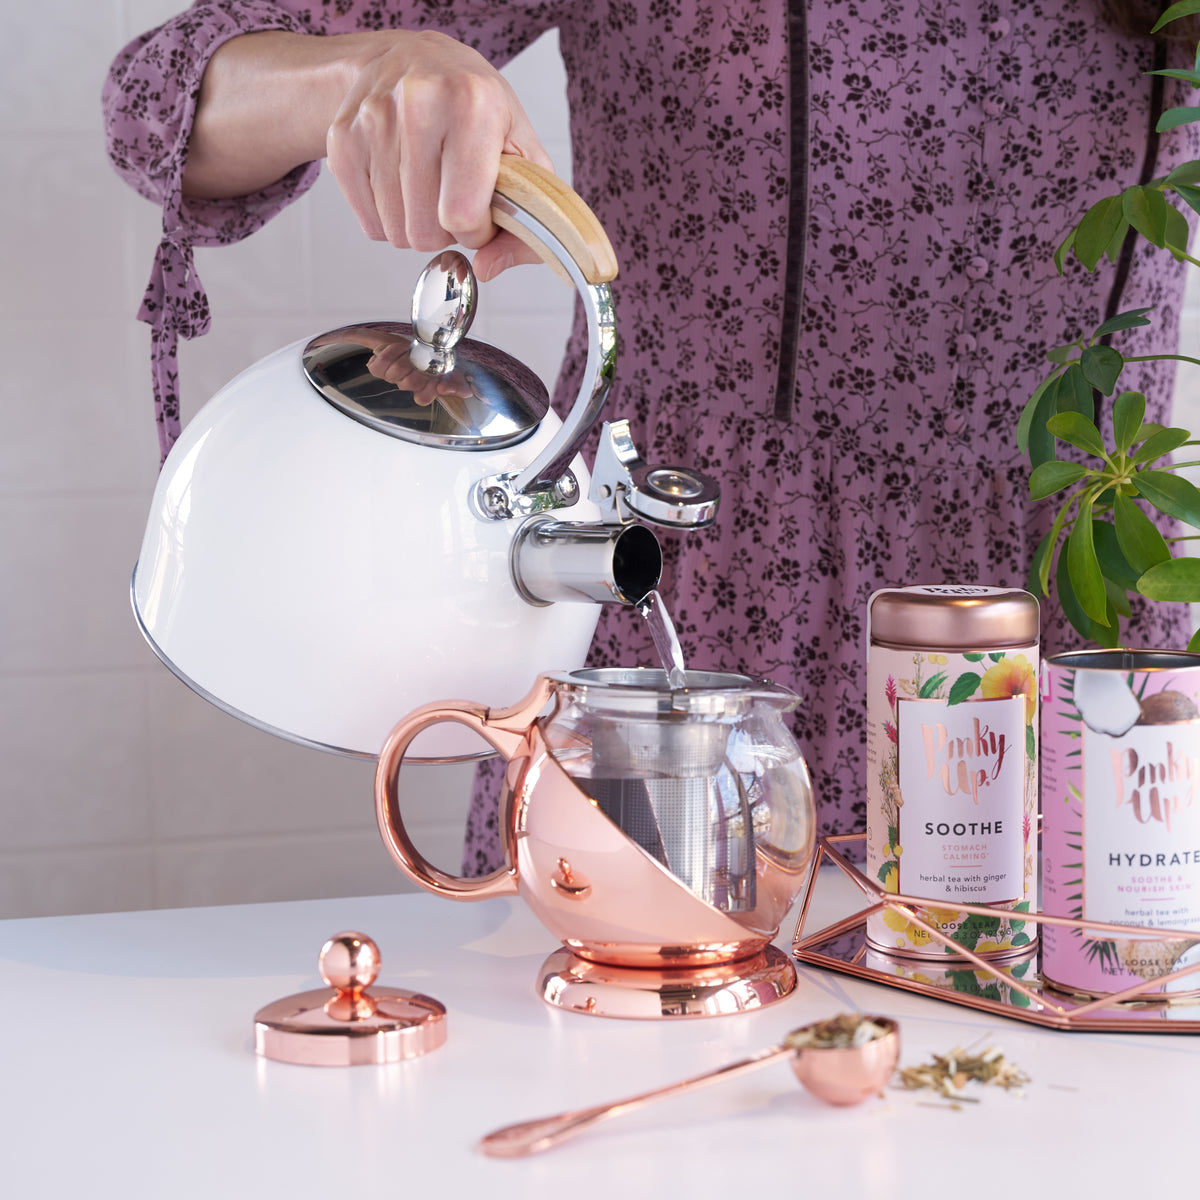  Lurrose Pink Teapot Pink Tea Kettle Whistling Tea